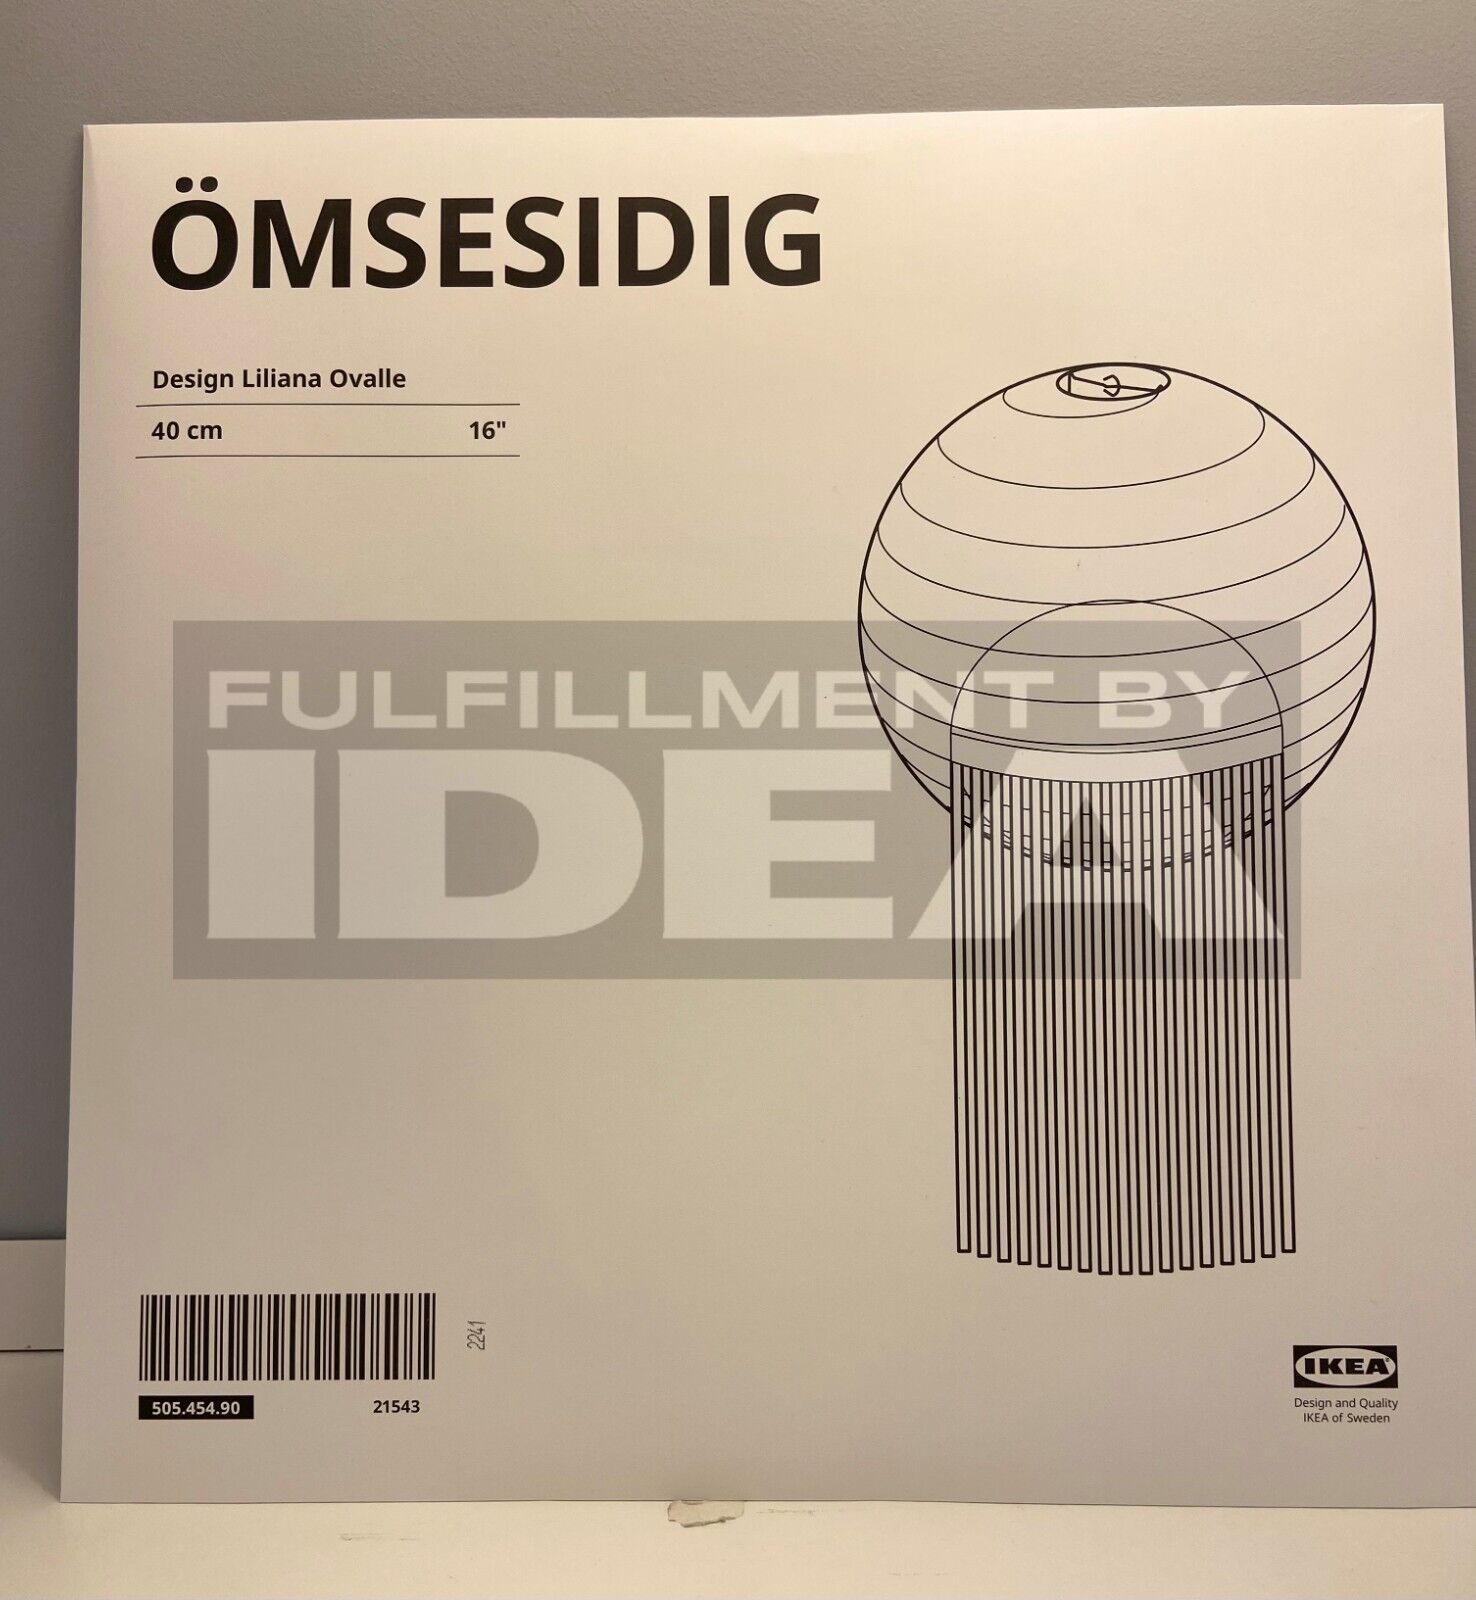 Primary image for Brand New IKEA OMSESIDIG White Pink Pendant Lamp Shade 505.454.90